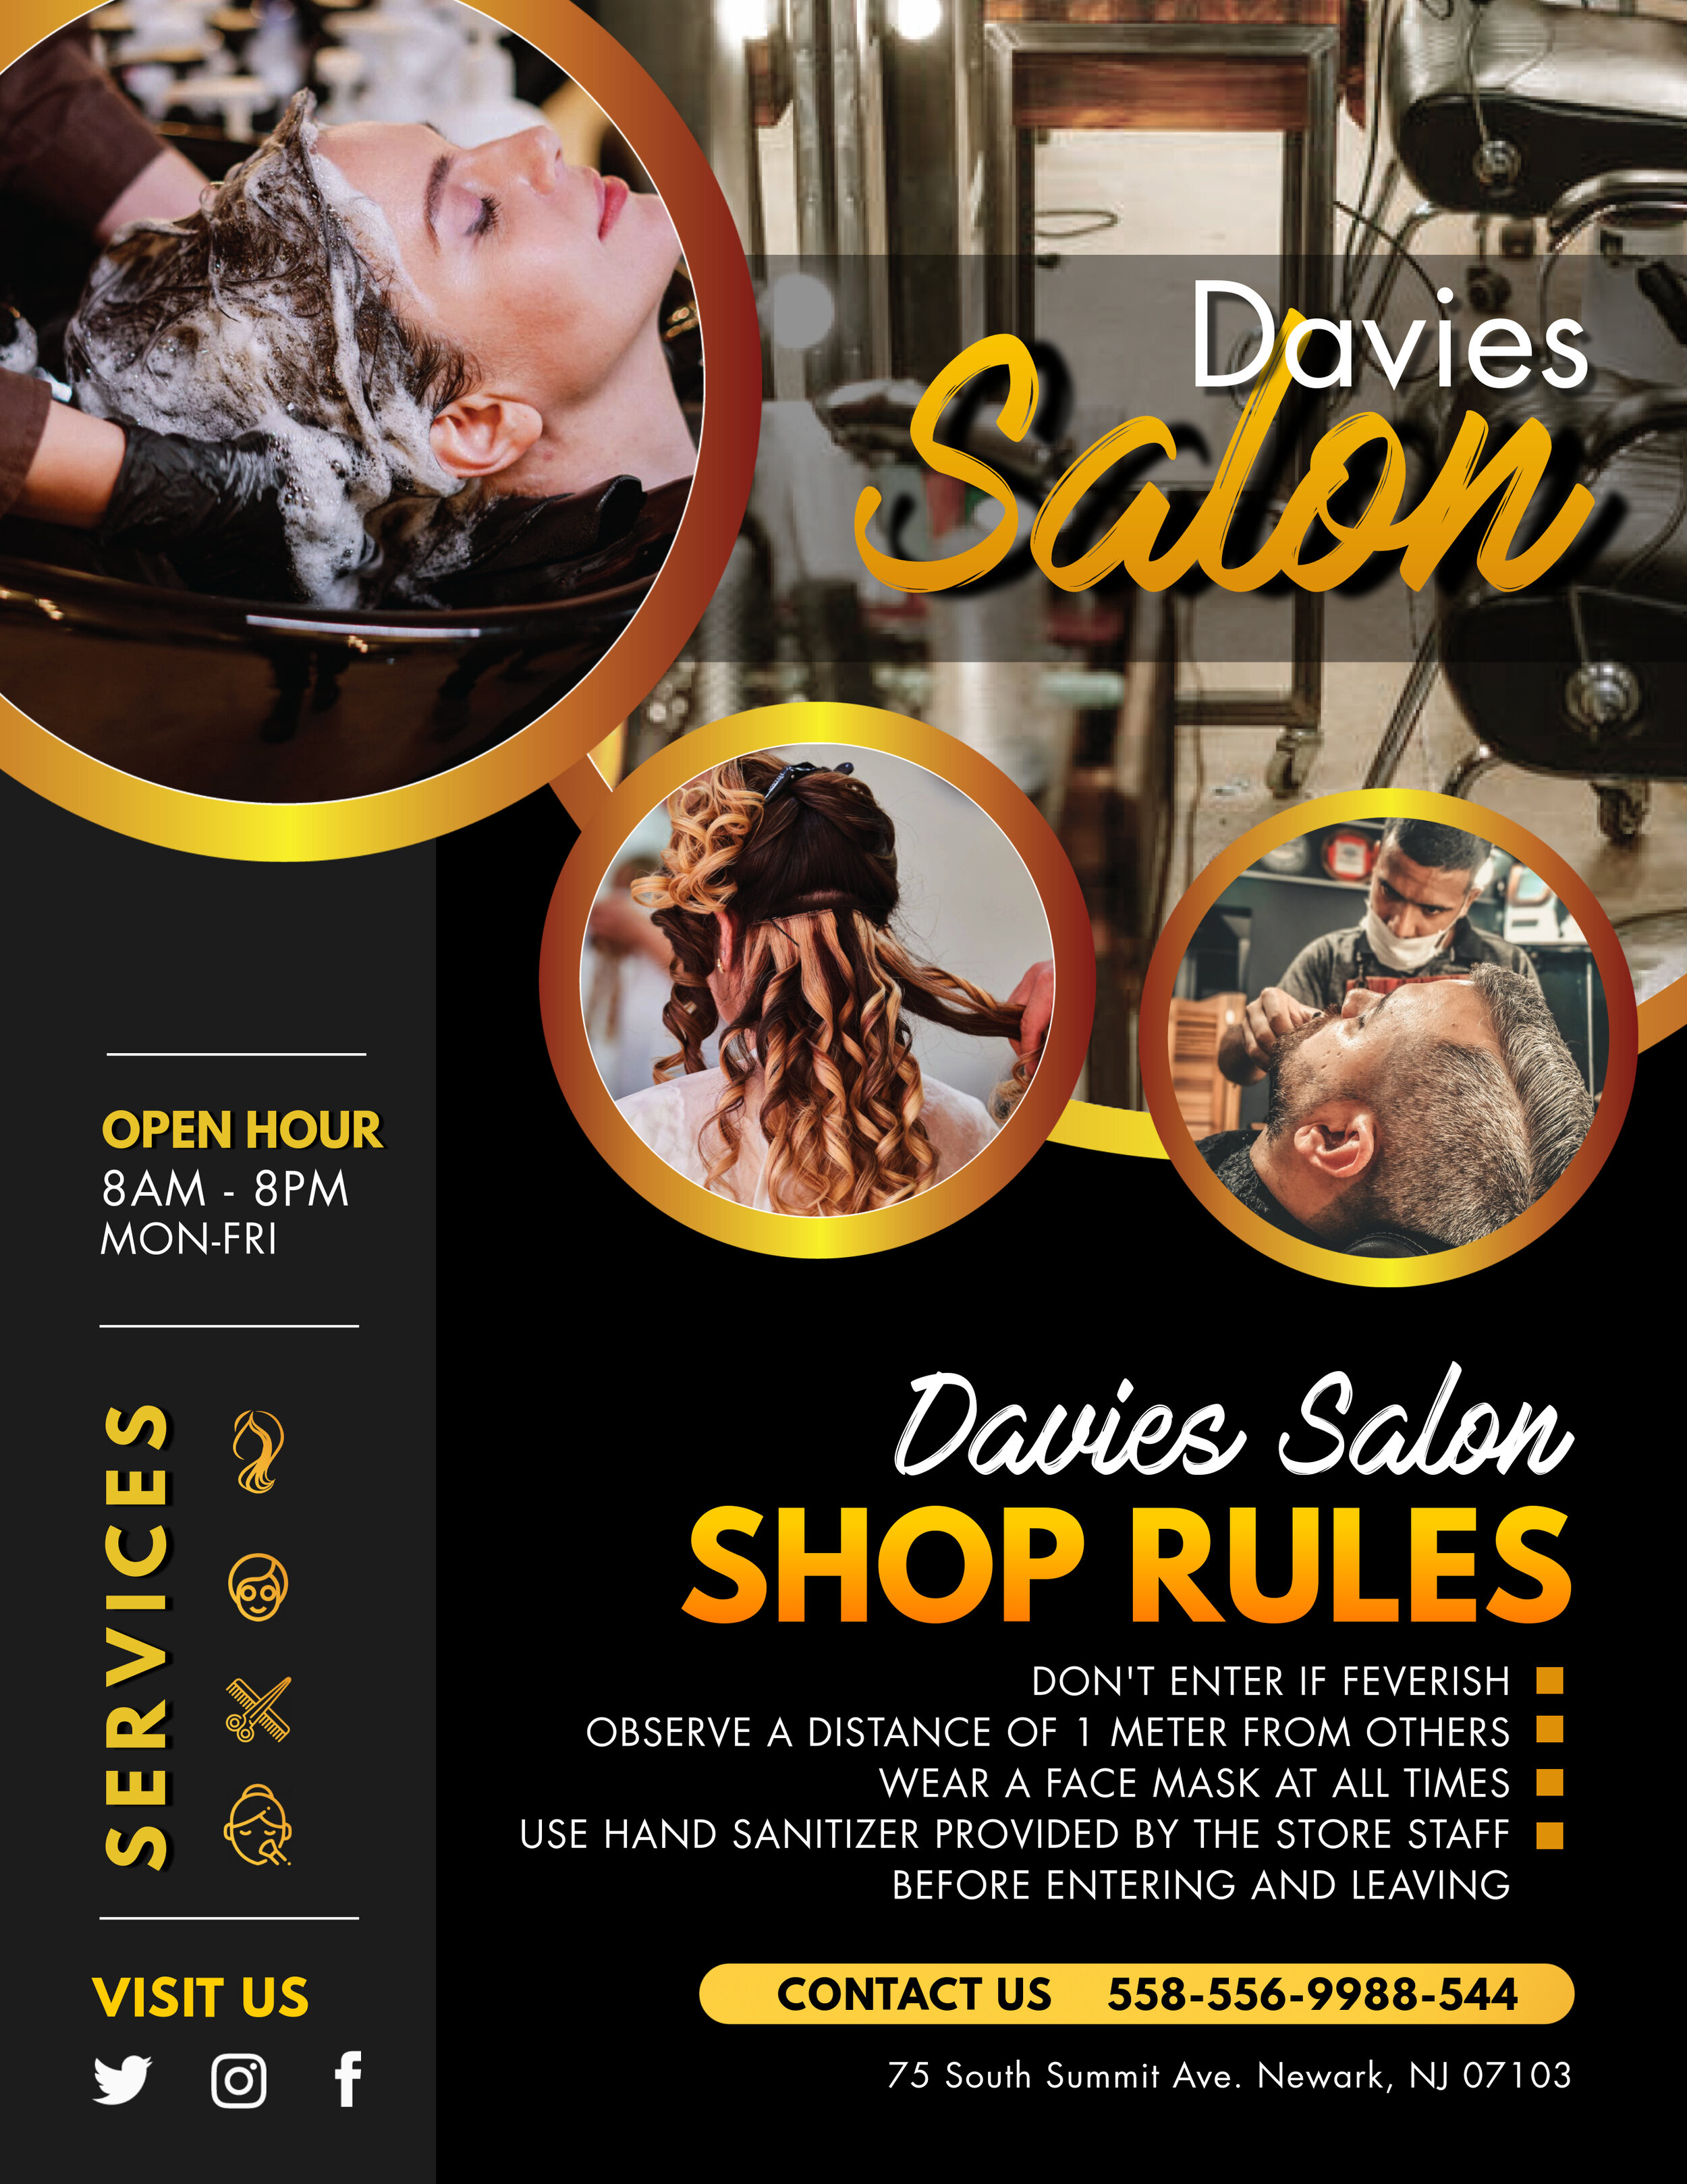 Copy of Hair Salon Shop Rules Flyer.jpg